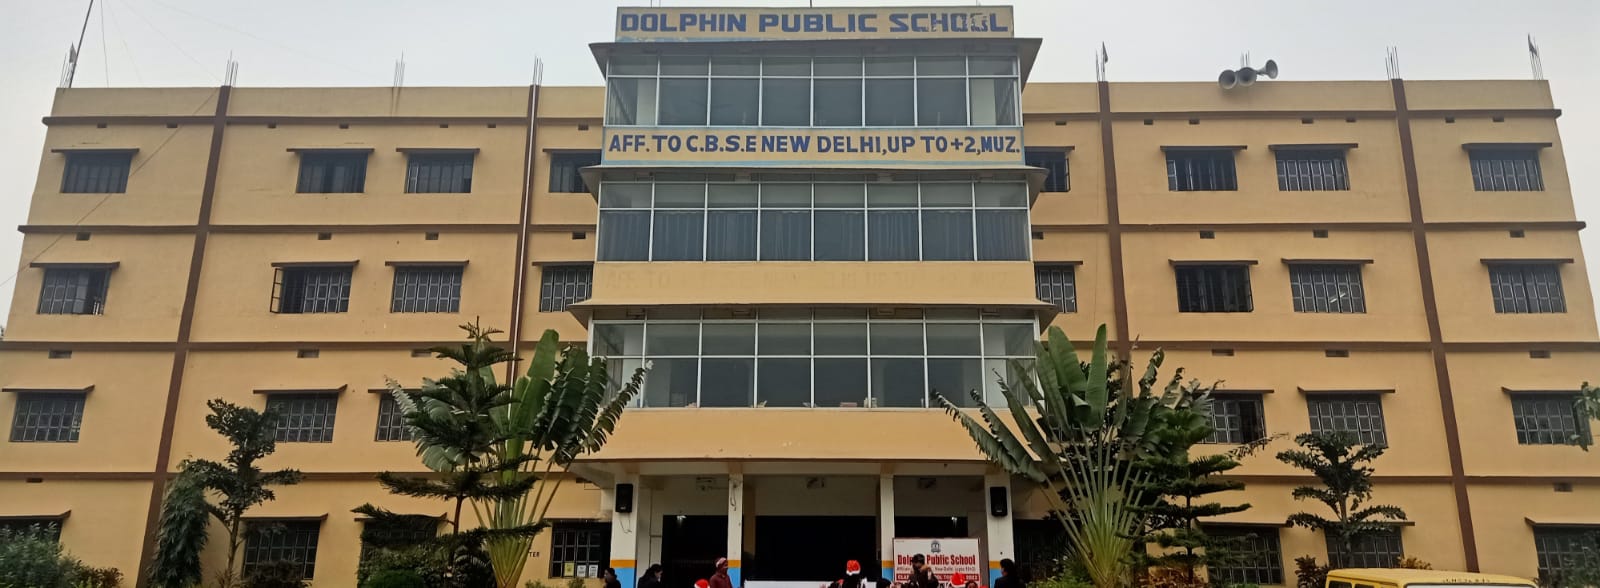 DOLPHIN PUBLIC SCHOOL